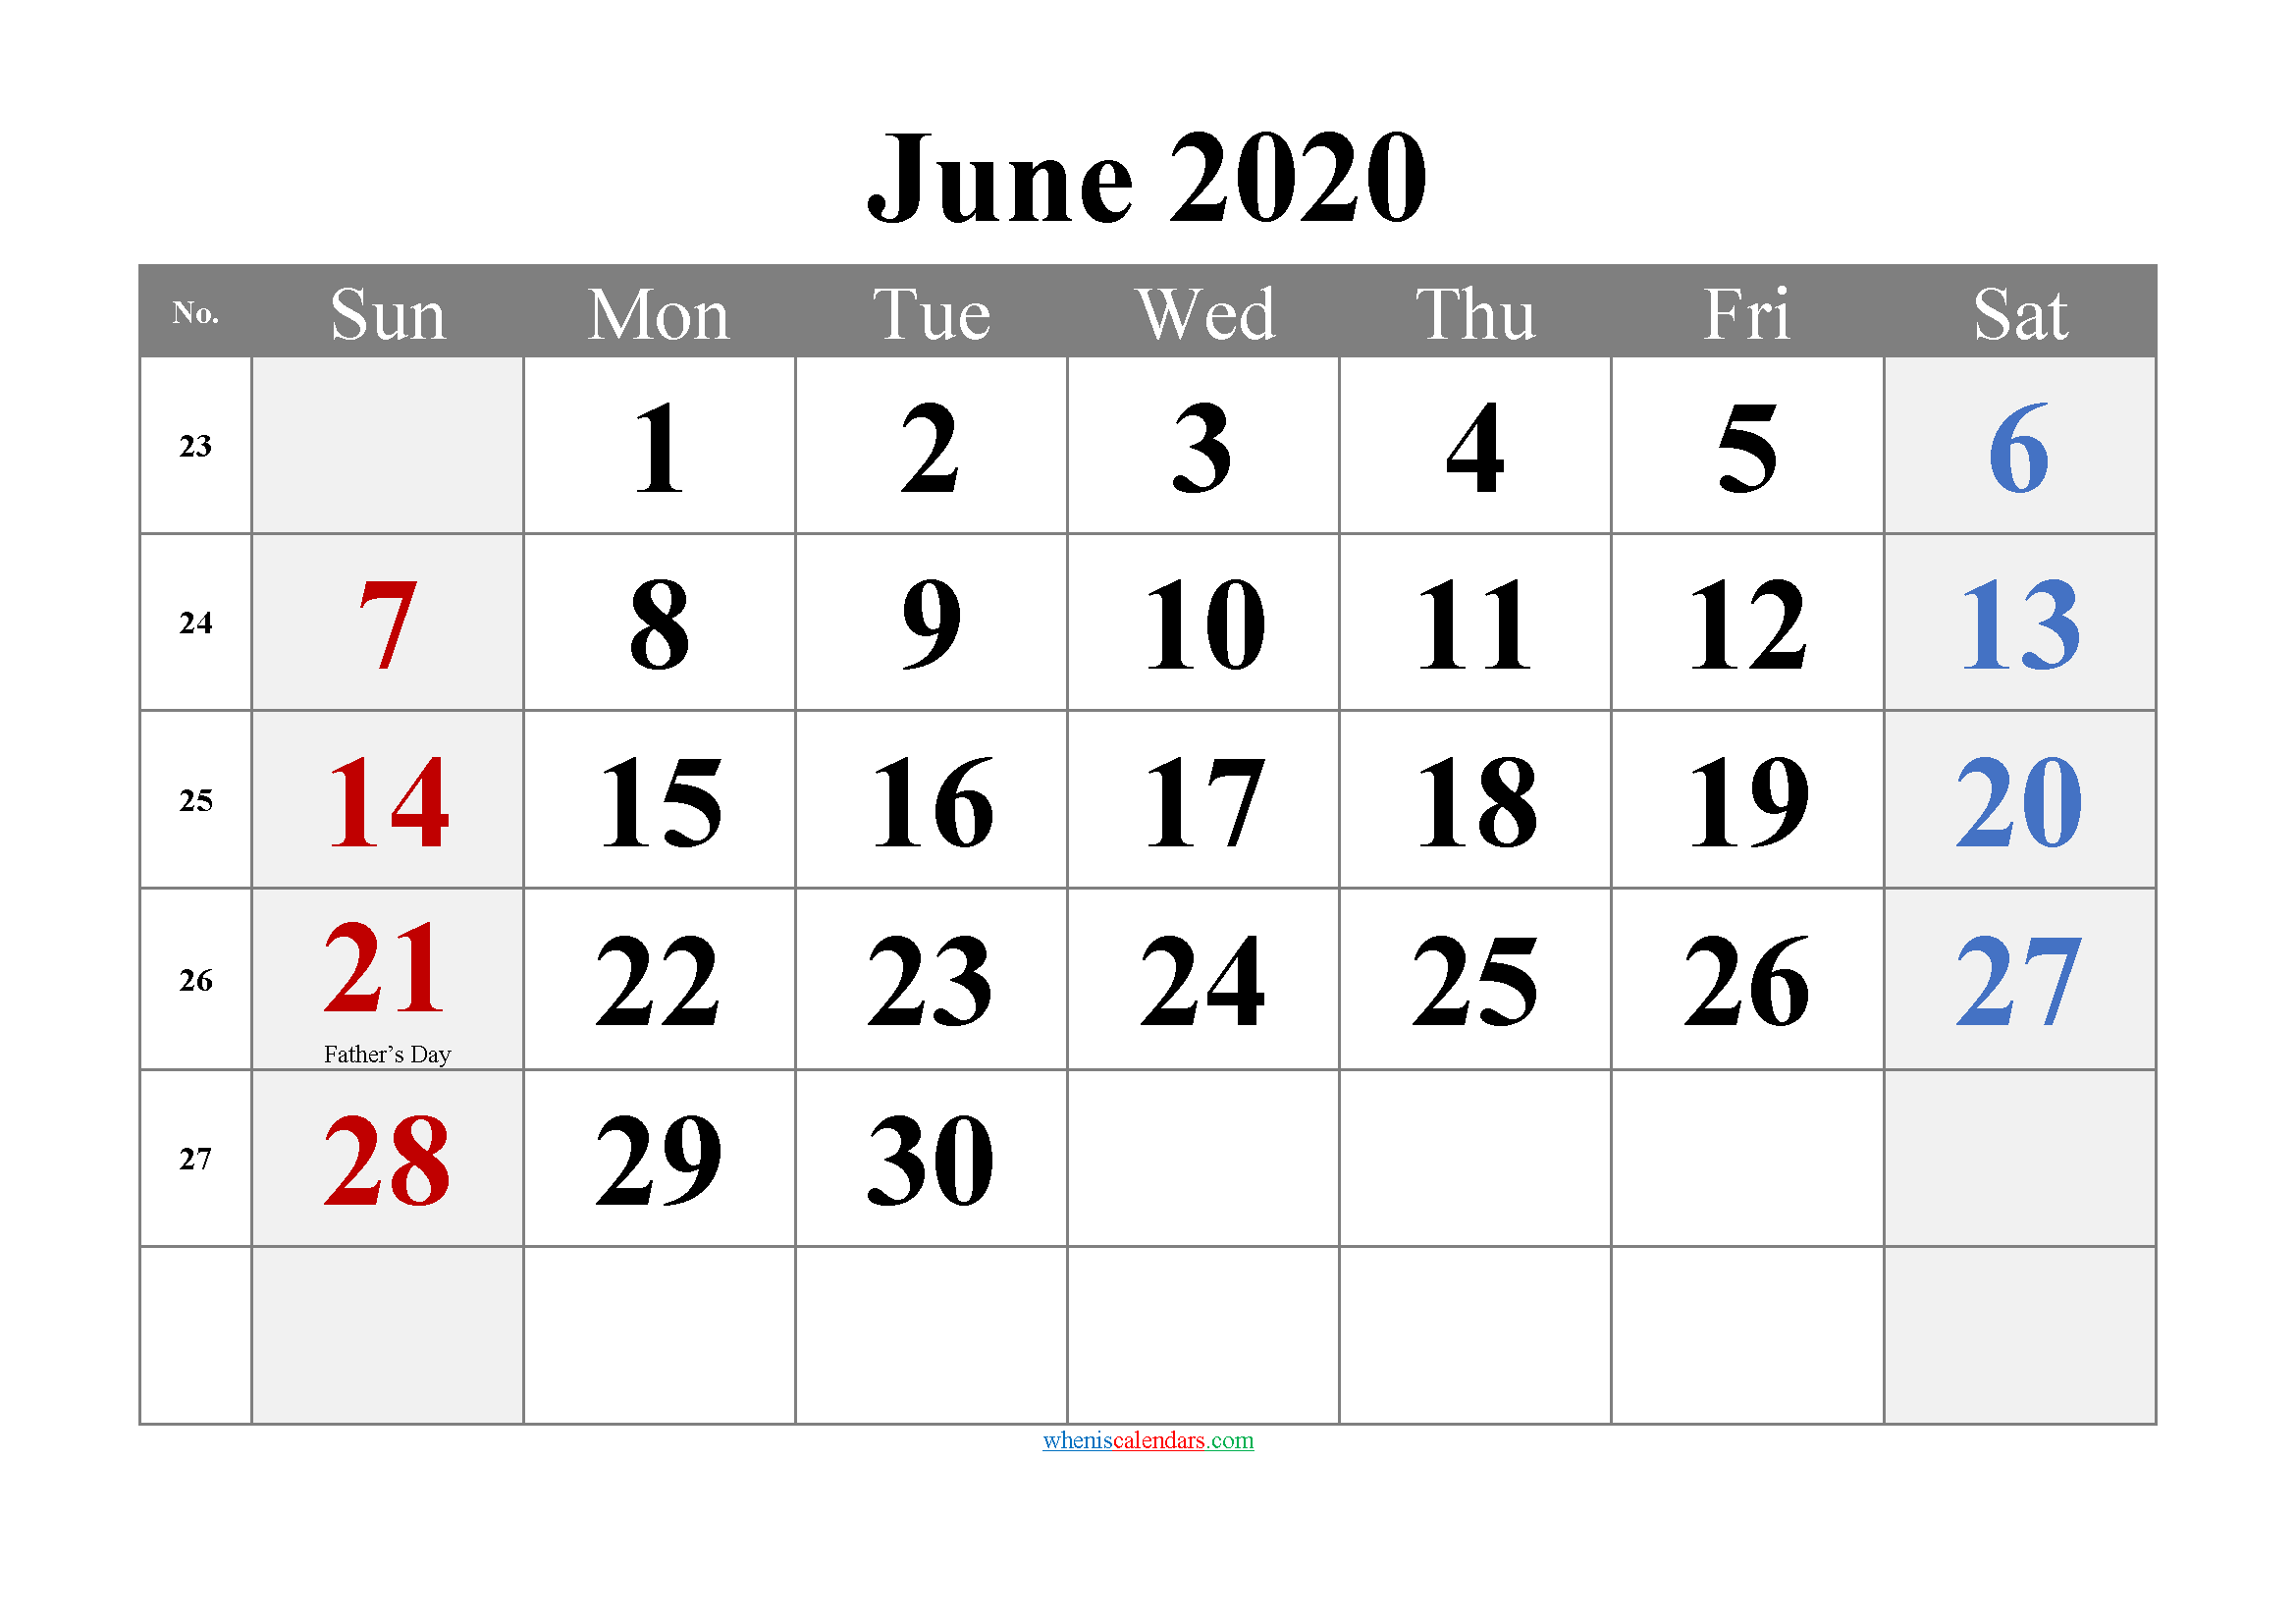 JUNE 2020 Printable Calendar with Holidays